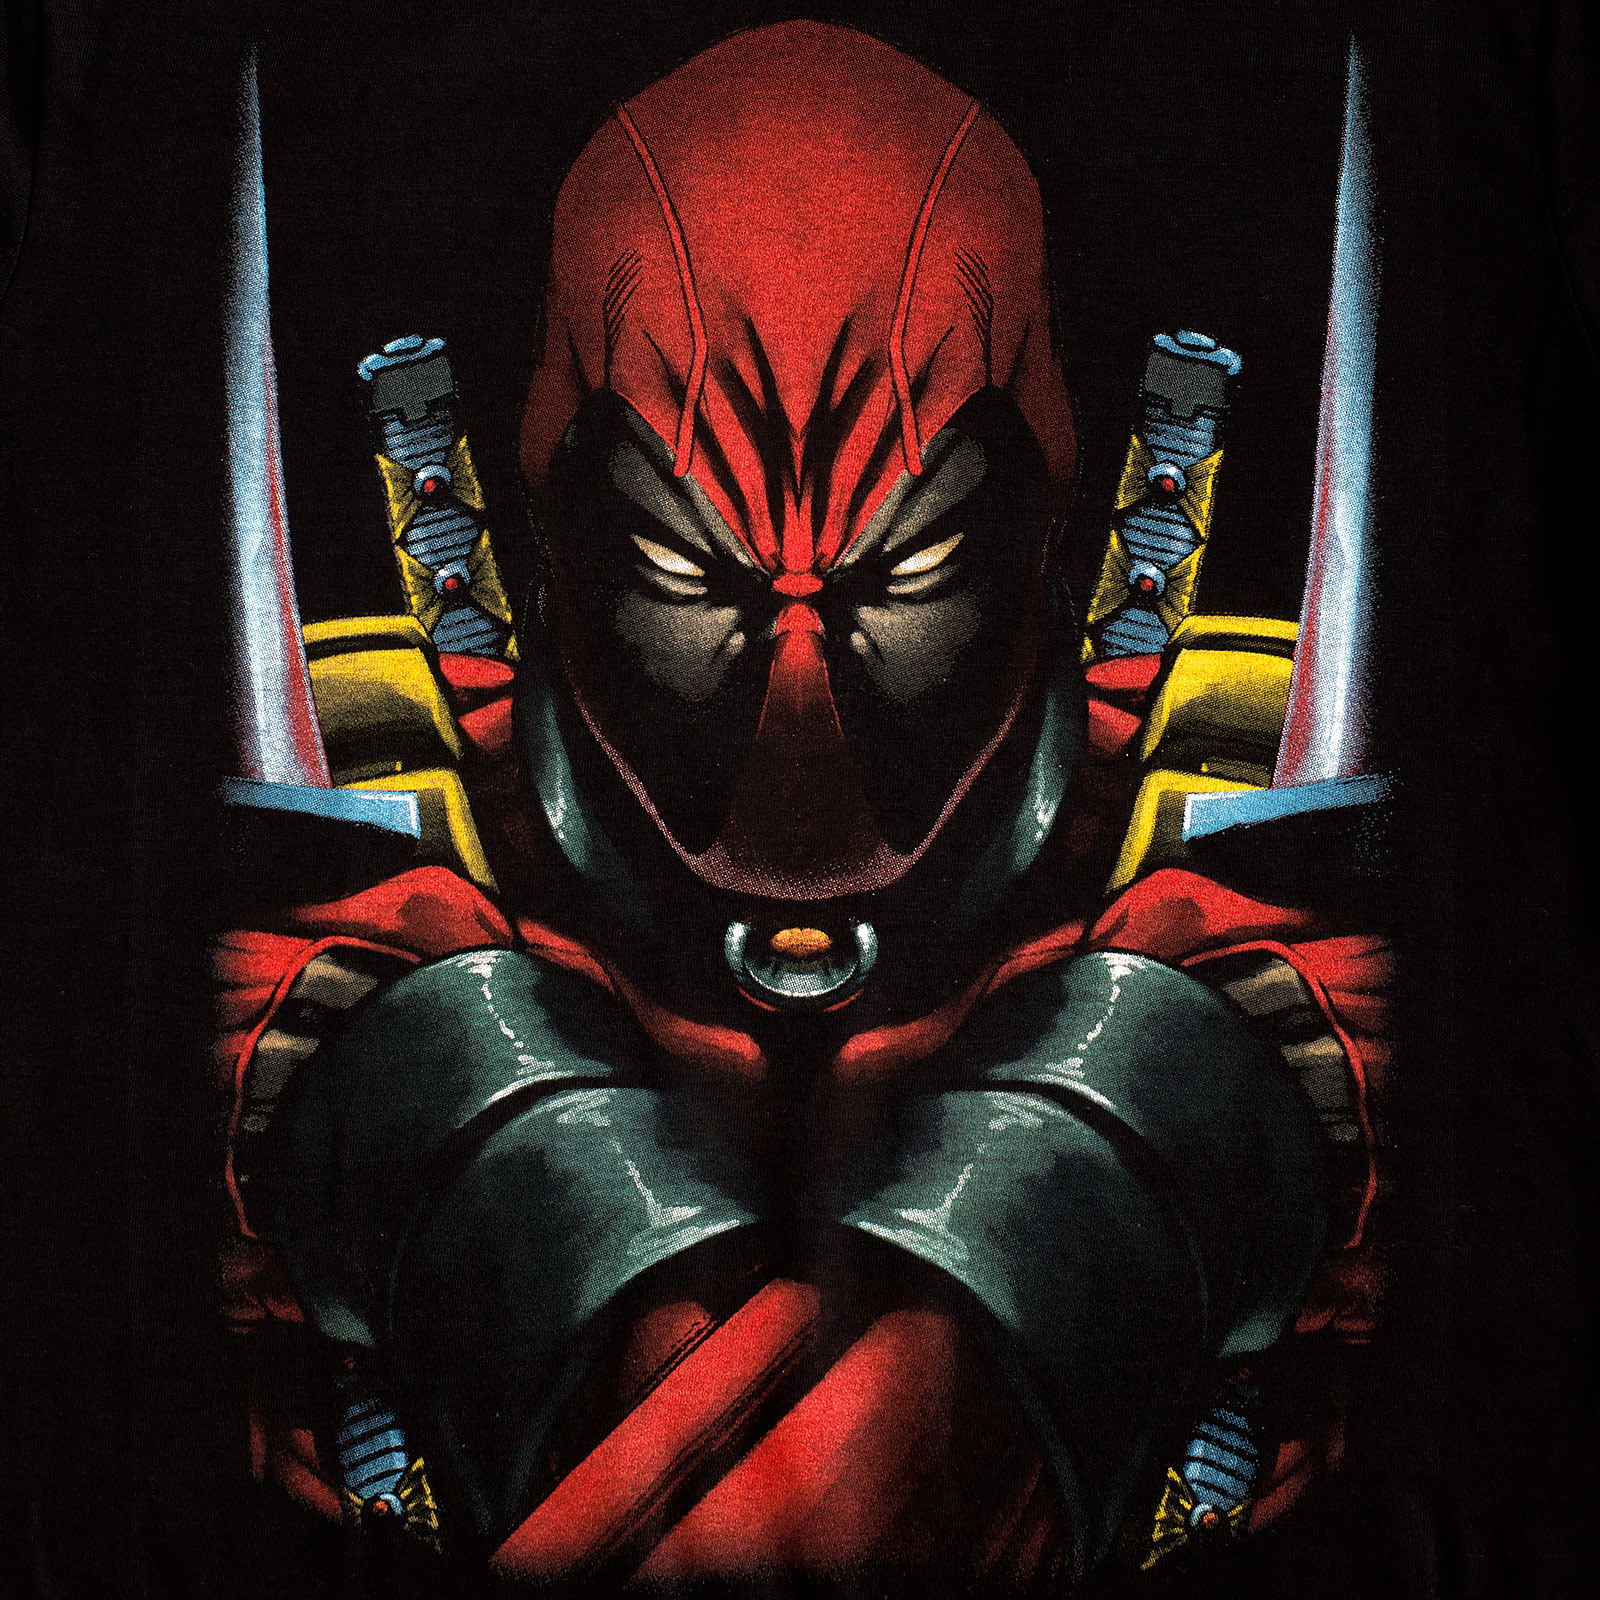 Deadpool - Marvel T-Shirt black